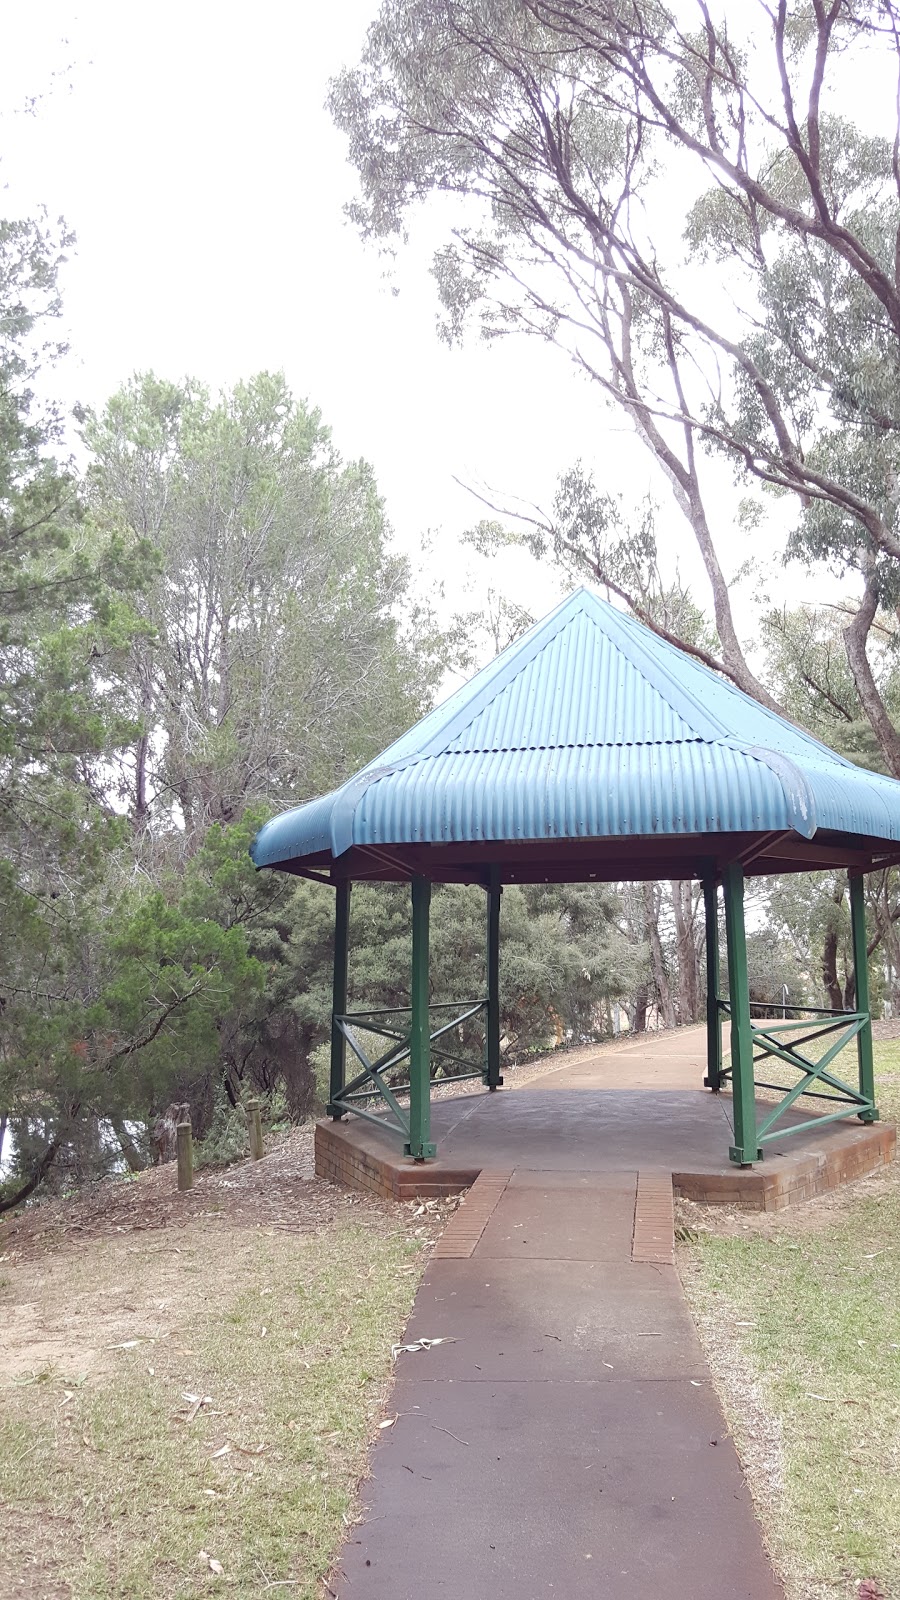 Smart Park | park | Spearwood WA 6163, Australia